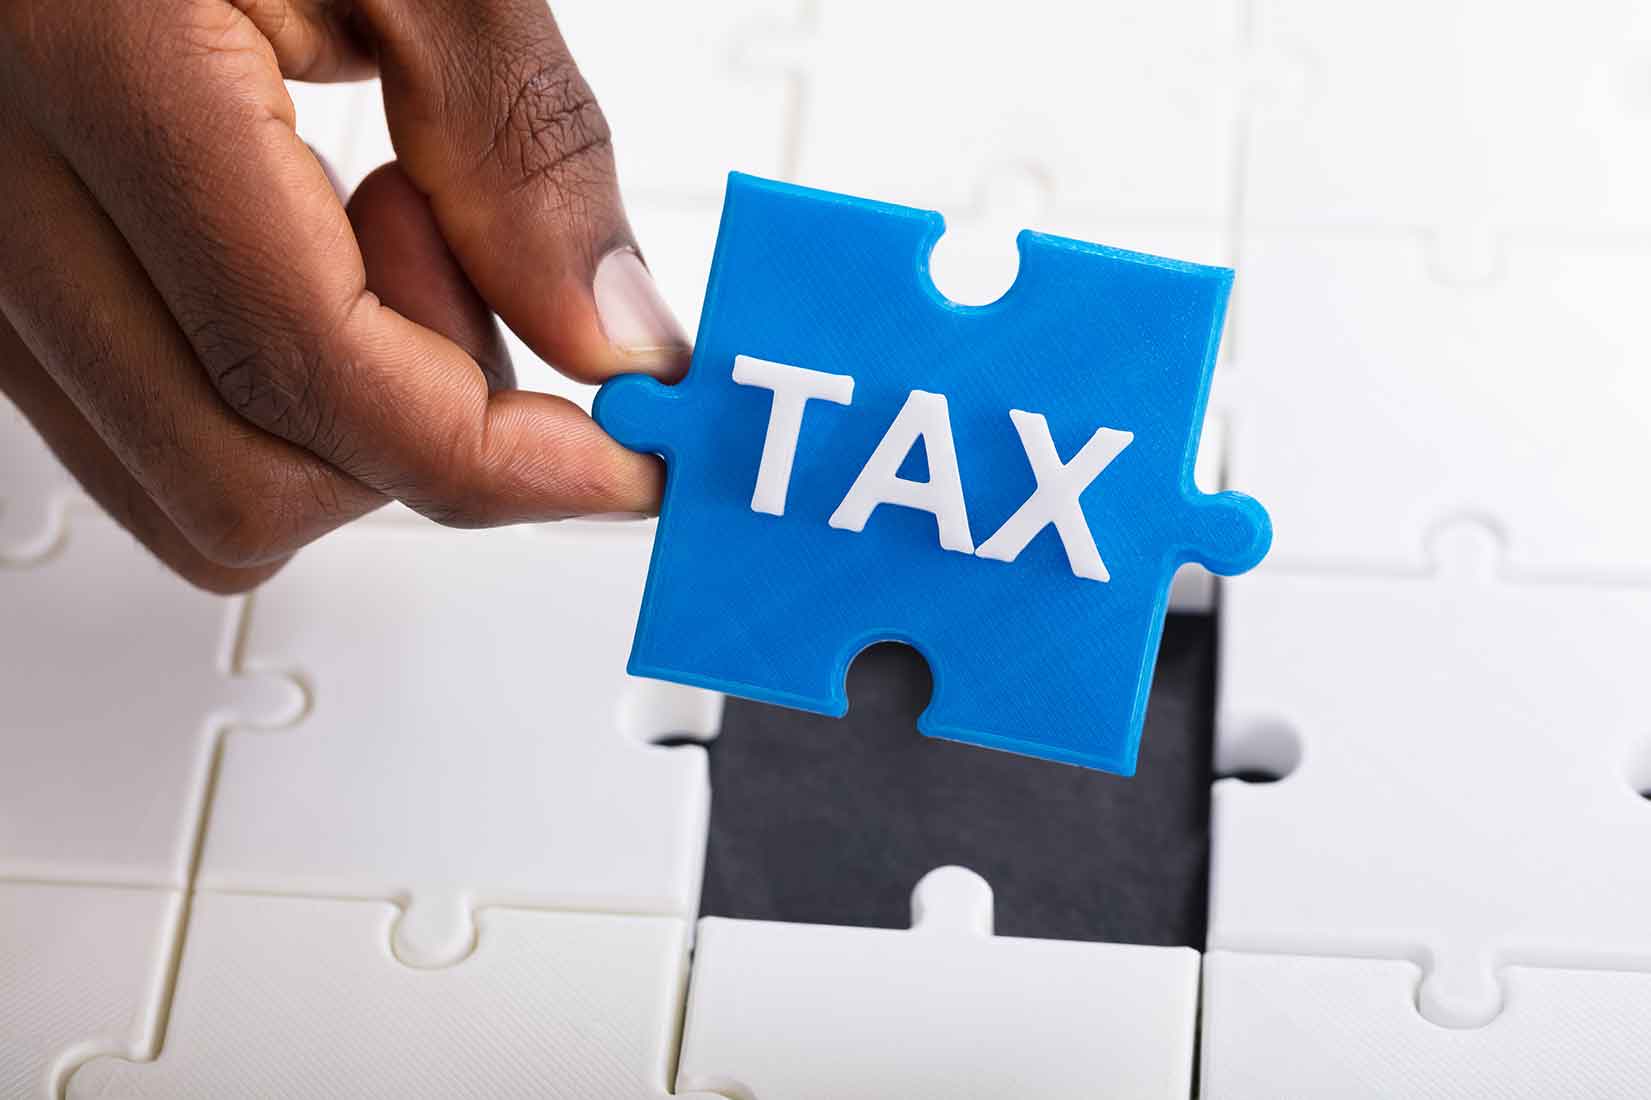 Value Addes Tax in Nigeria